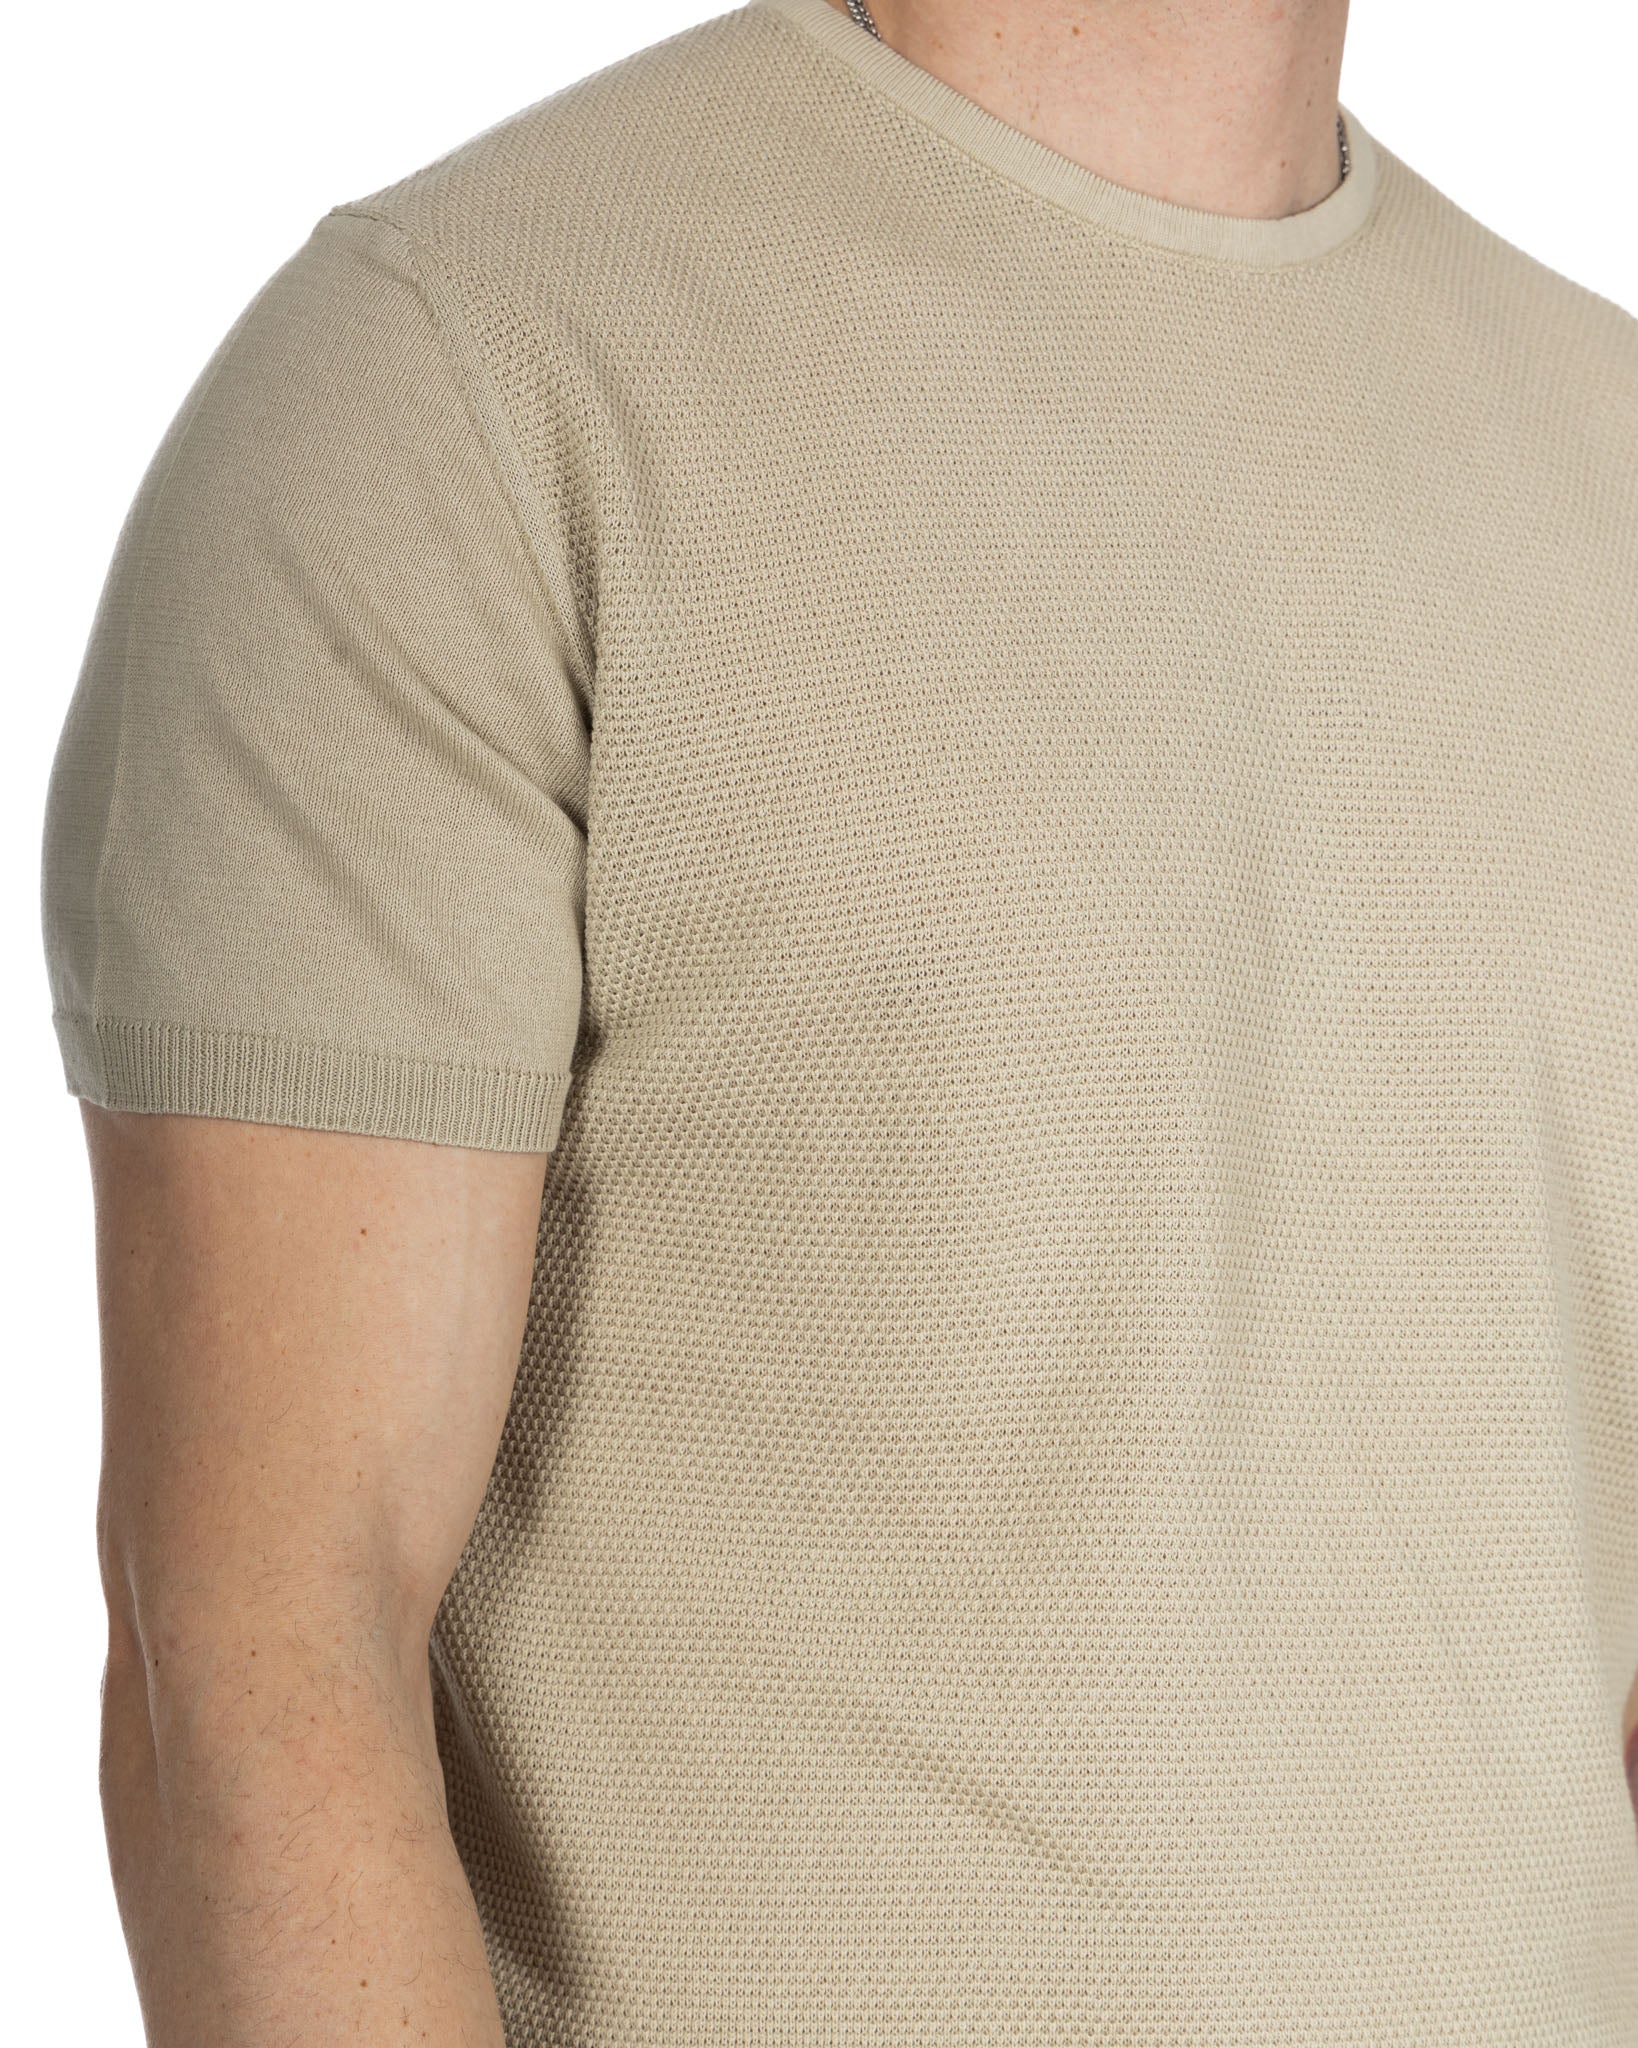 Lorenzo - t-shirt beige in maglia jacquard